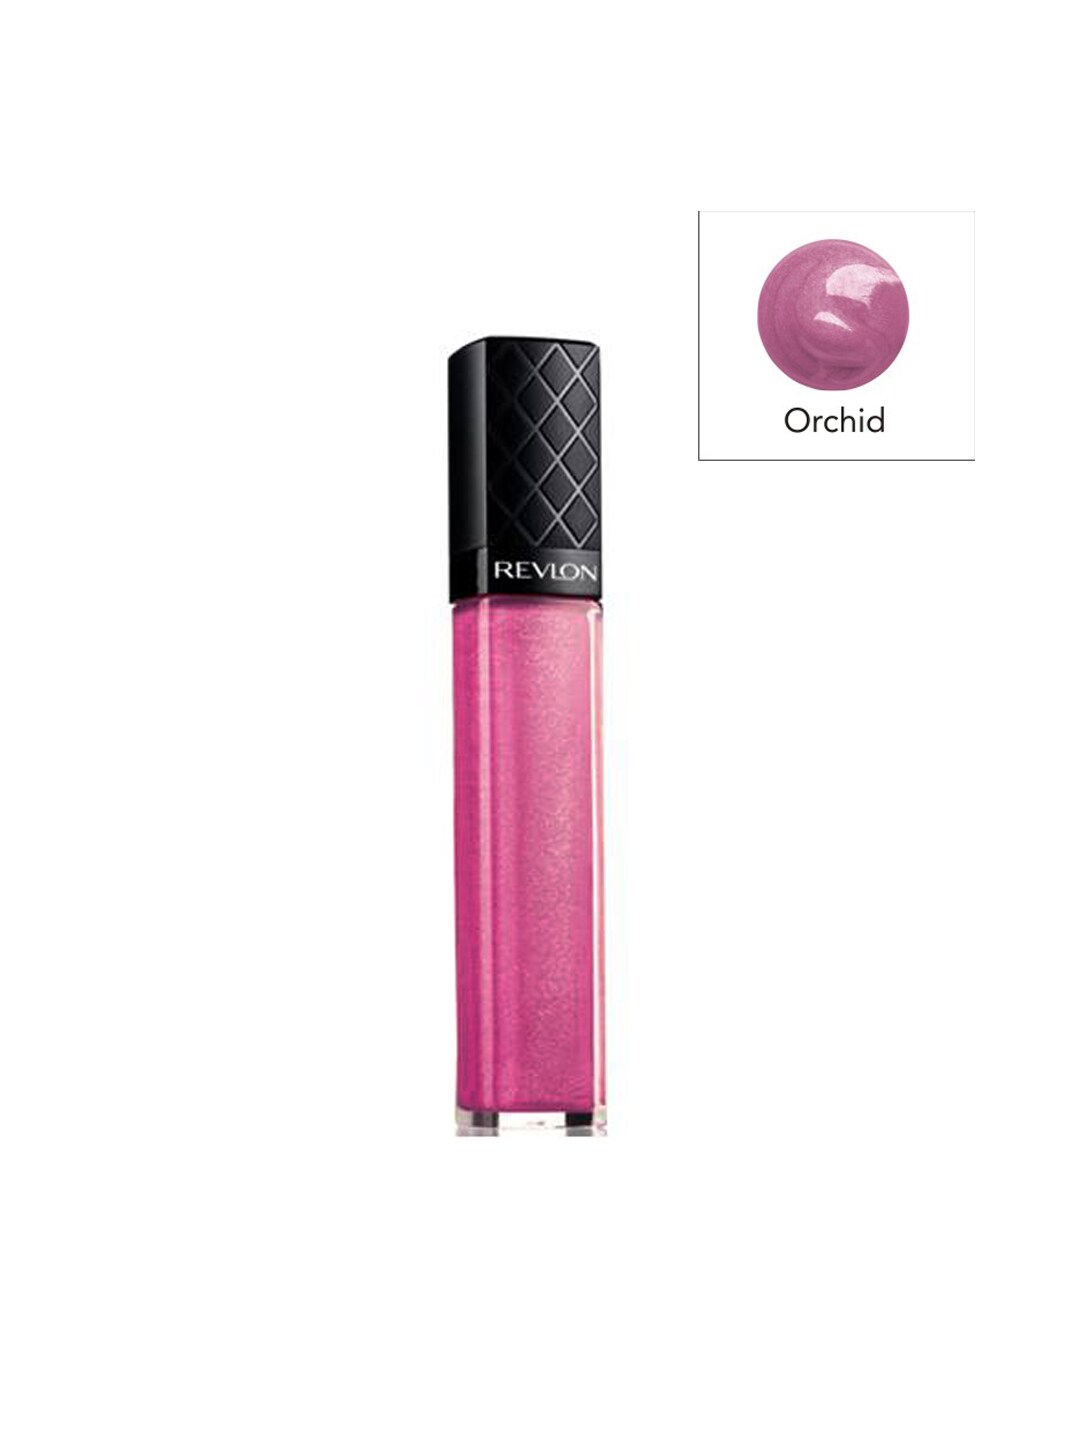 Revlon ColorBurst Orchid Lip Gloss 12